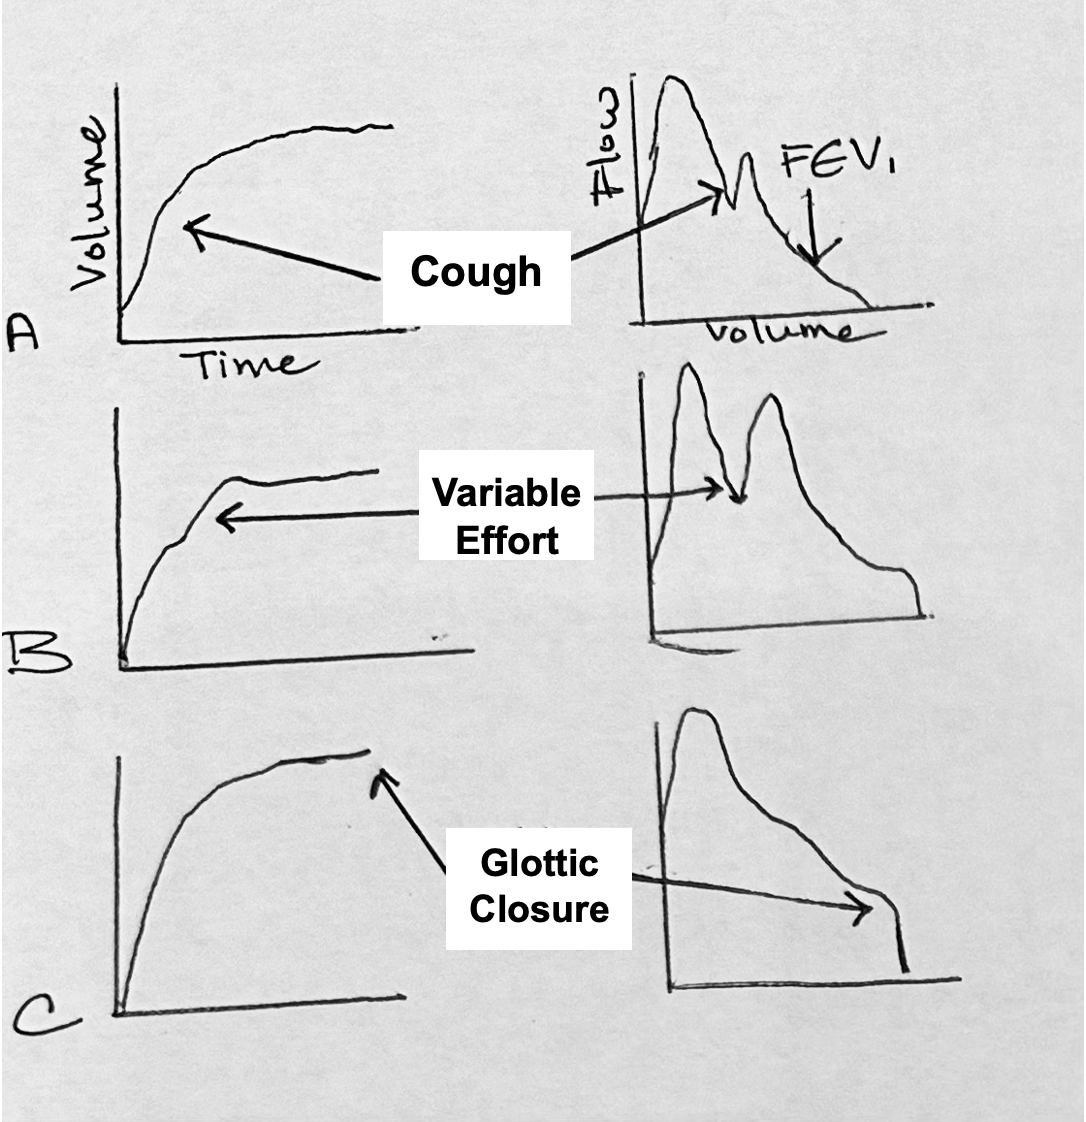 Volume and flow graphs illustrating spirometry efforts